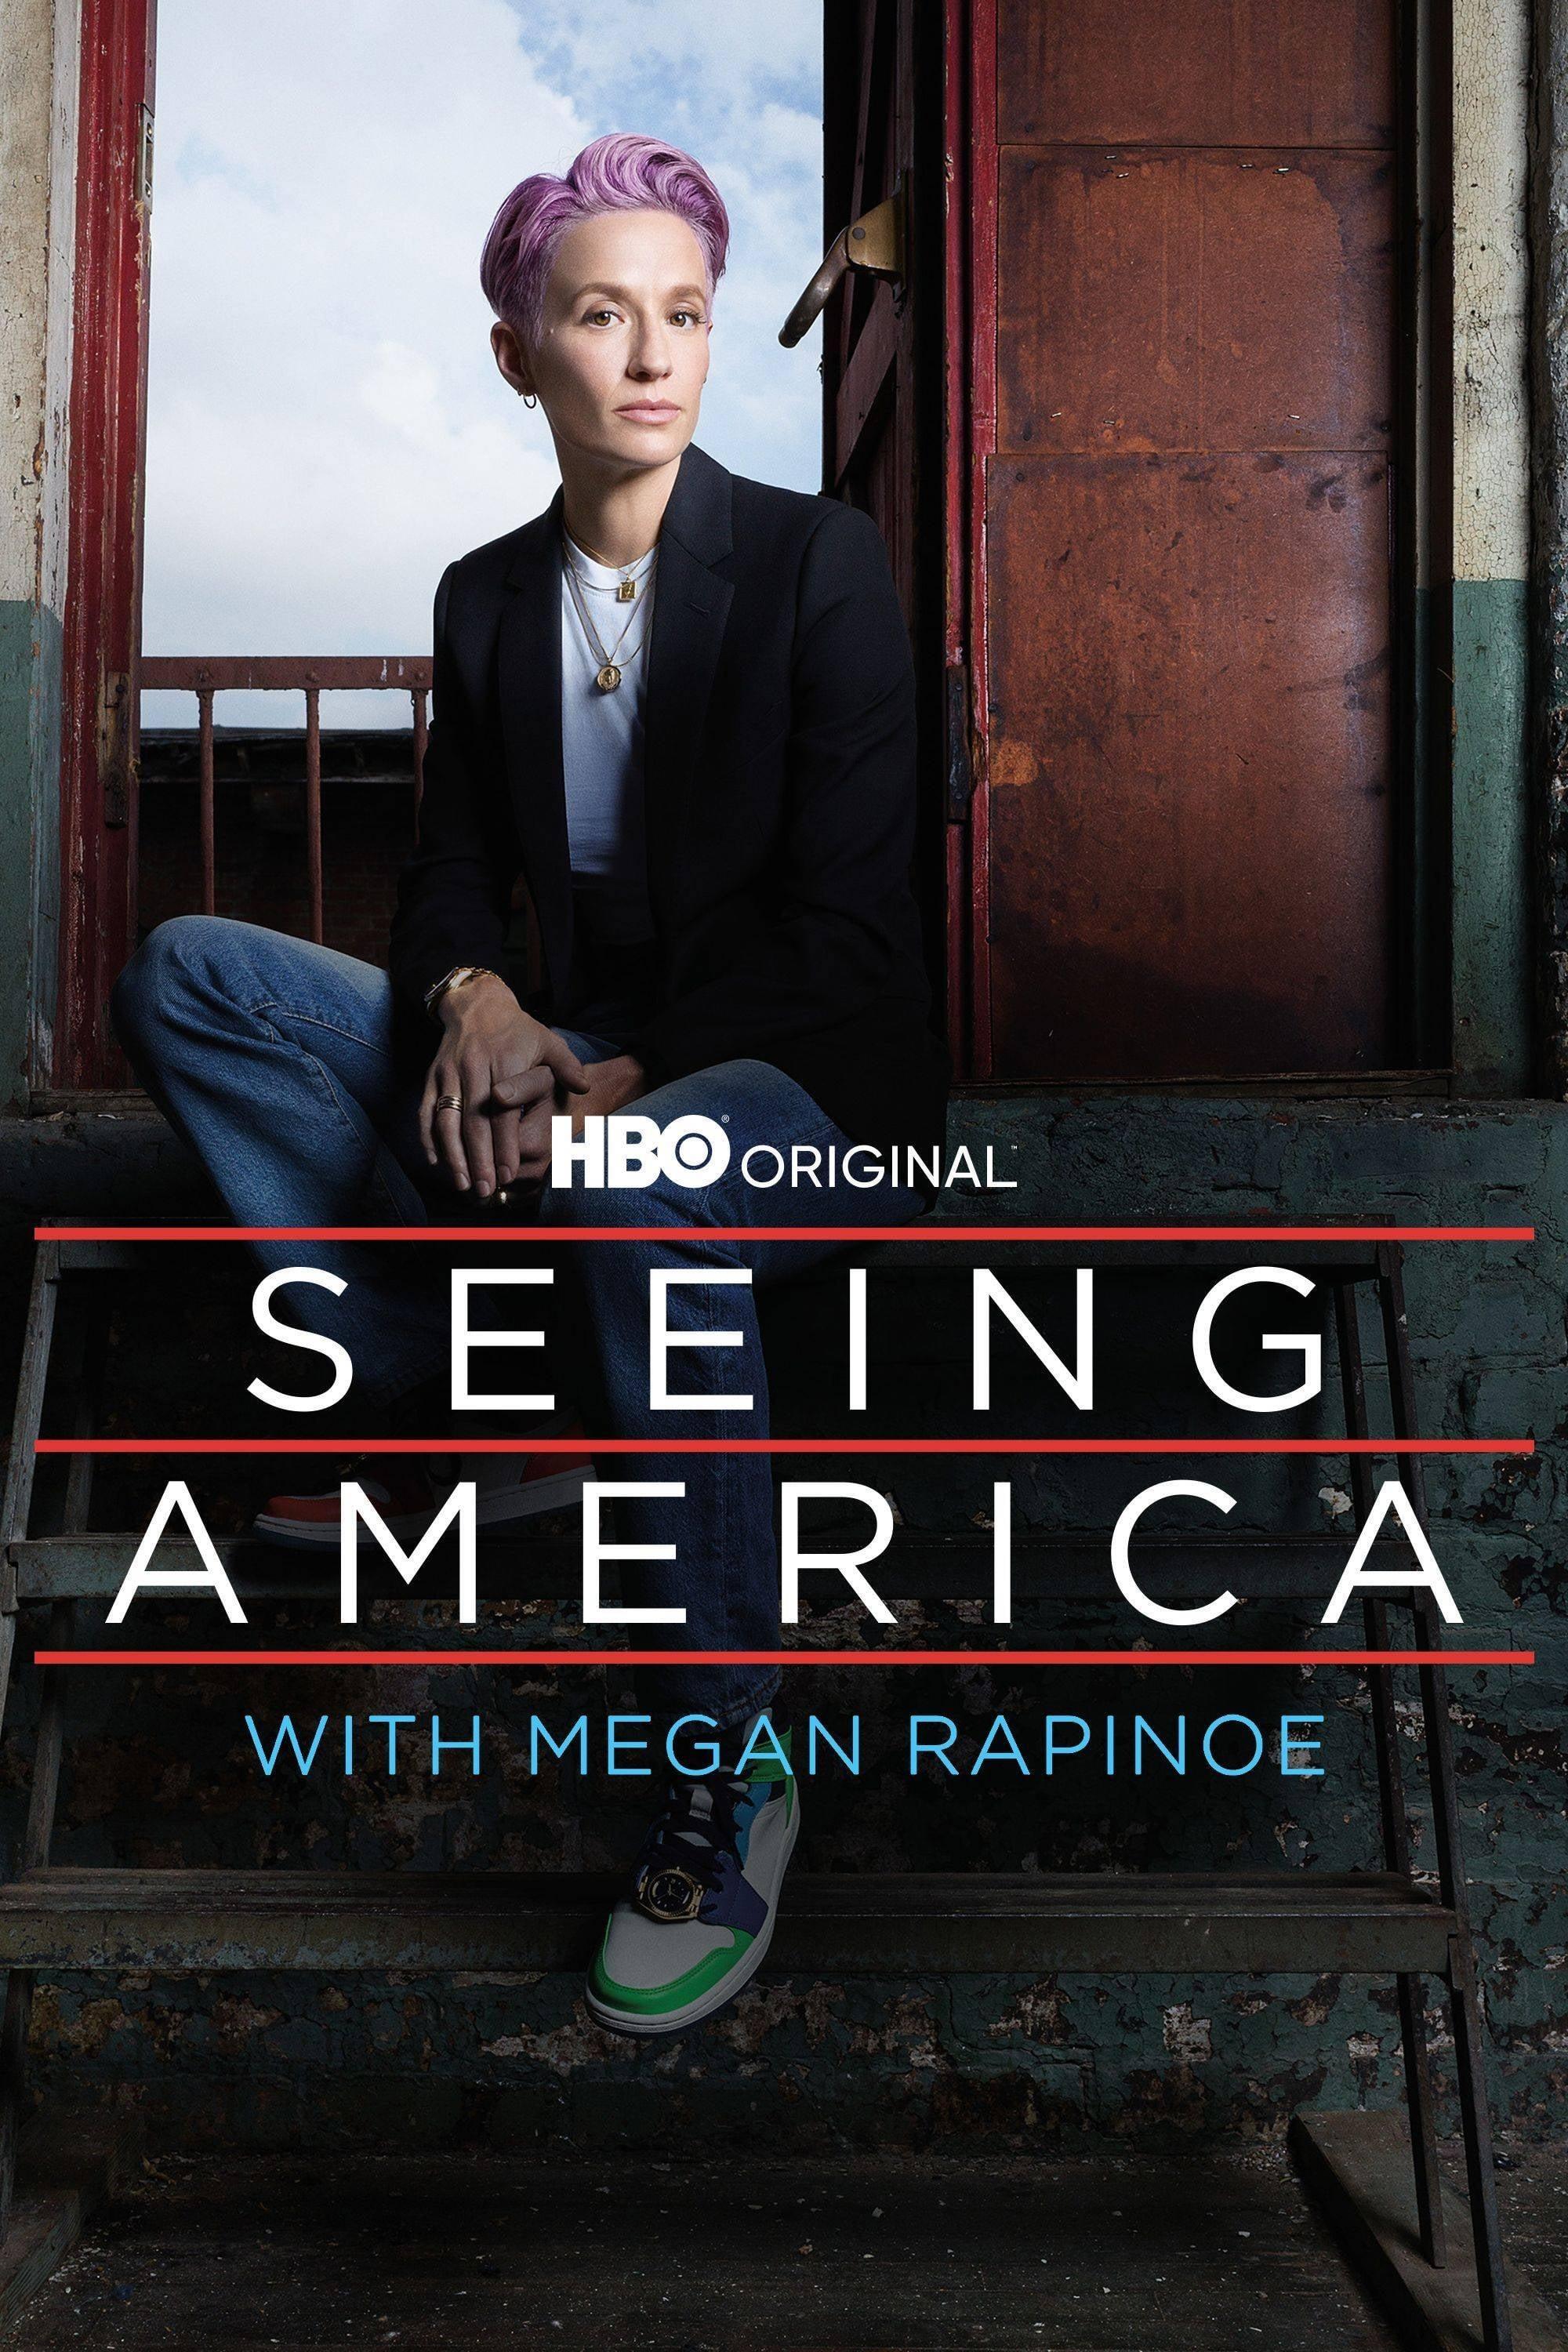 Seeing America with Megan Rapinoe poster